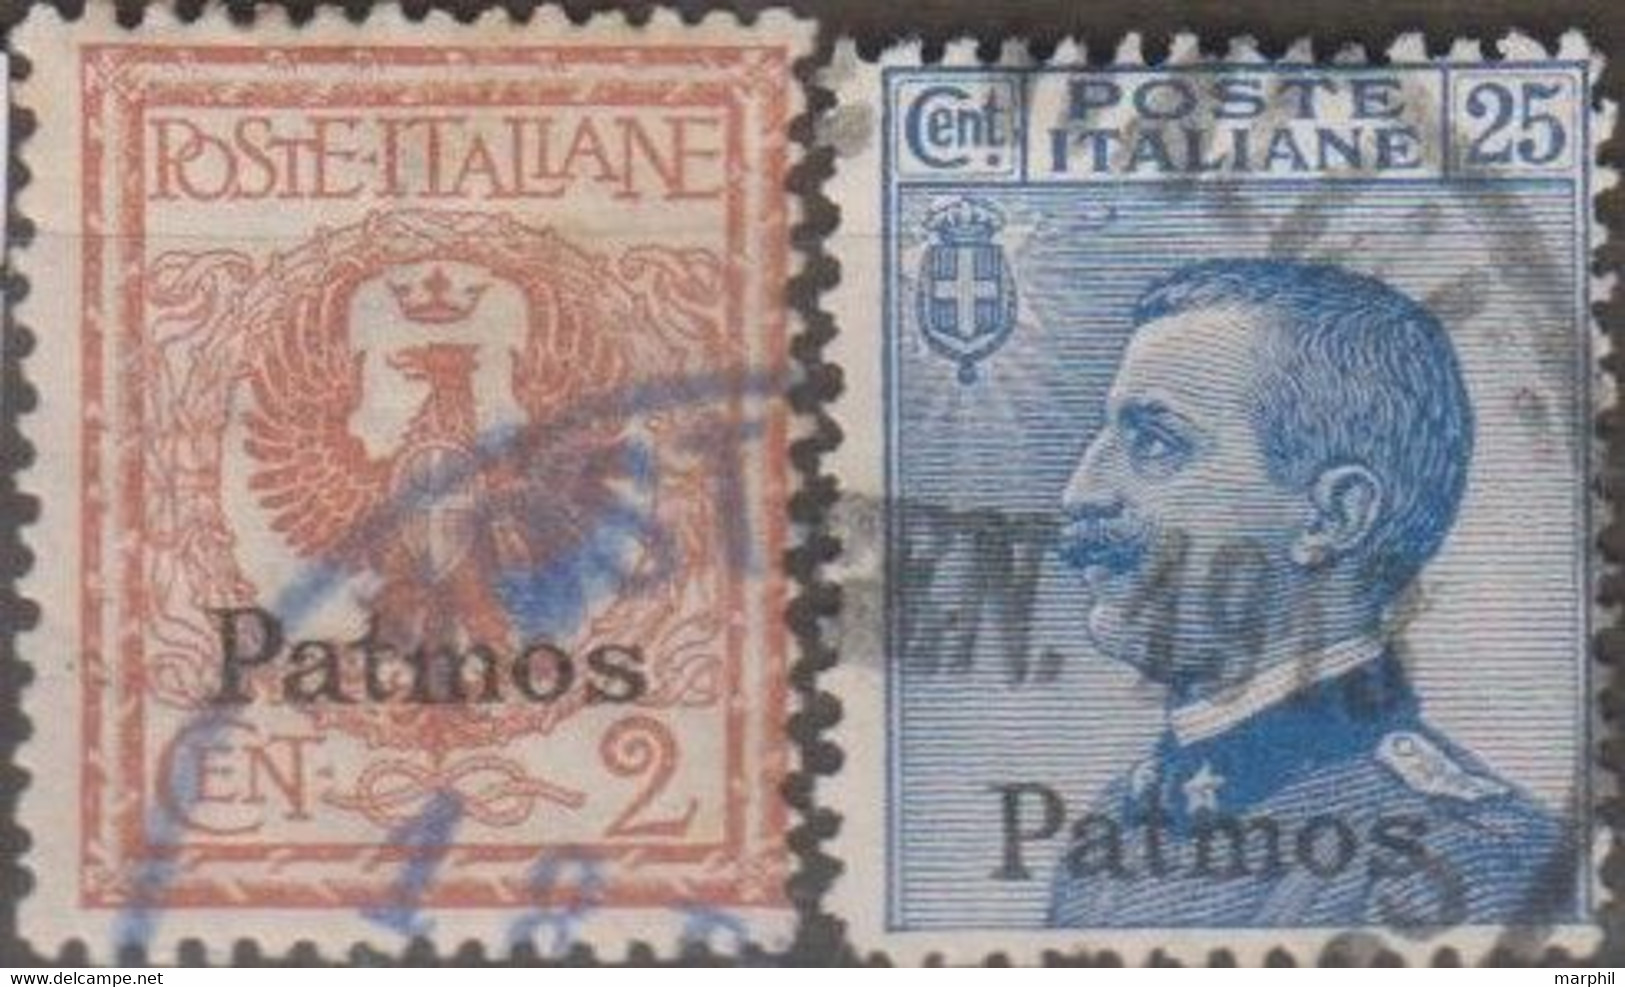 Italia Colonie Egeo Patmo 1912 SaN°1 2c+25c. (o) Vedere Scansione - Egée (Patmo)